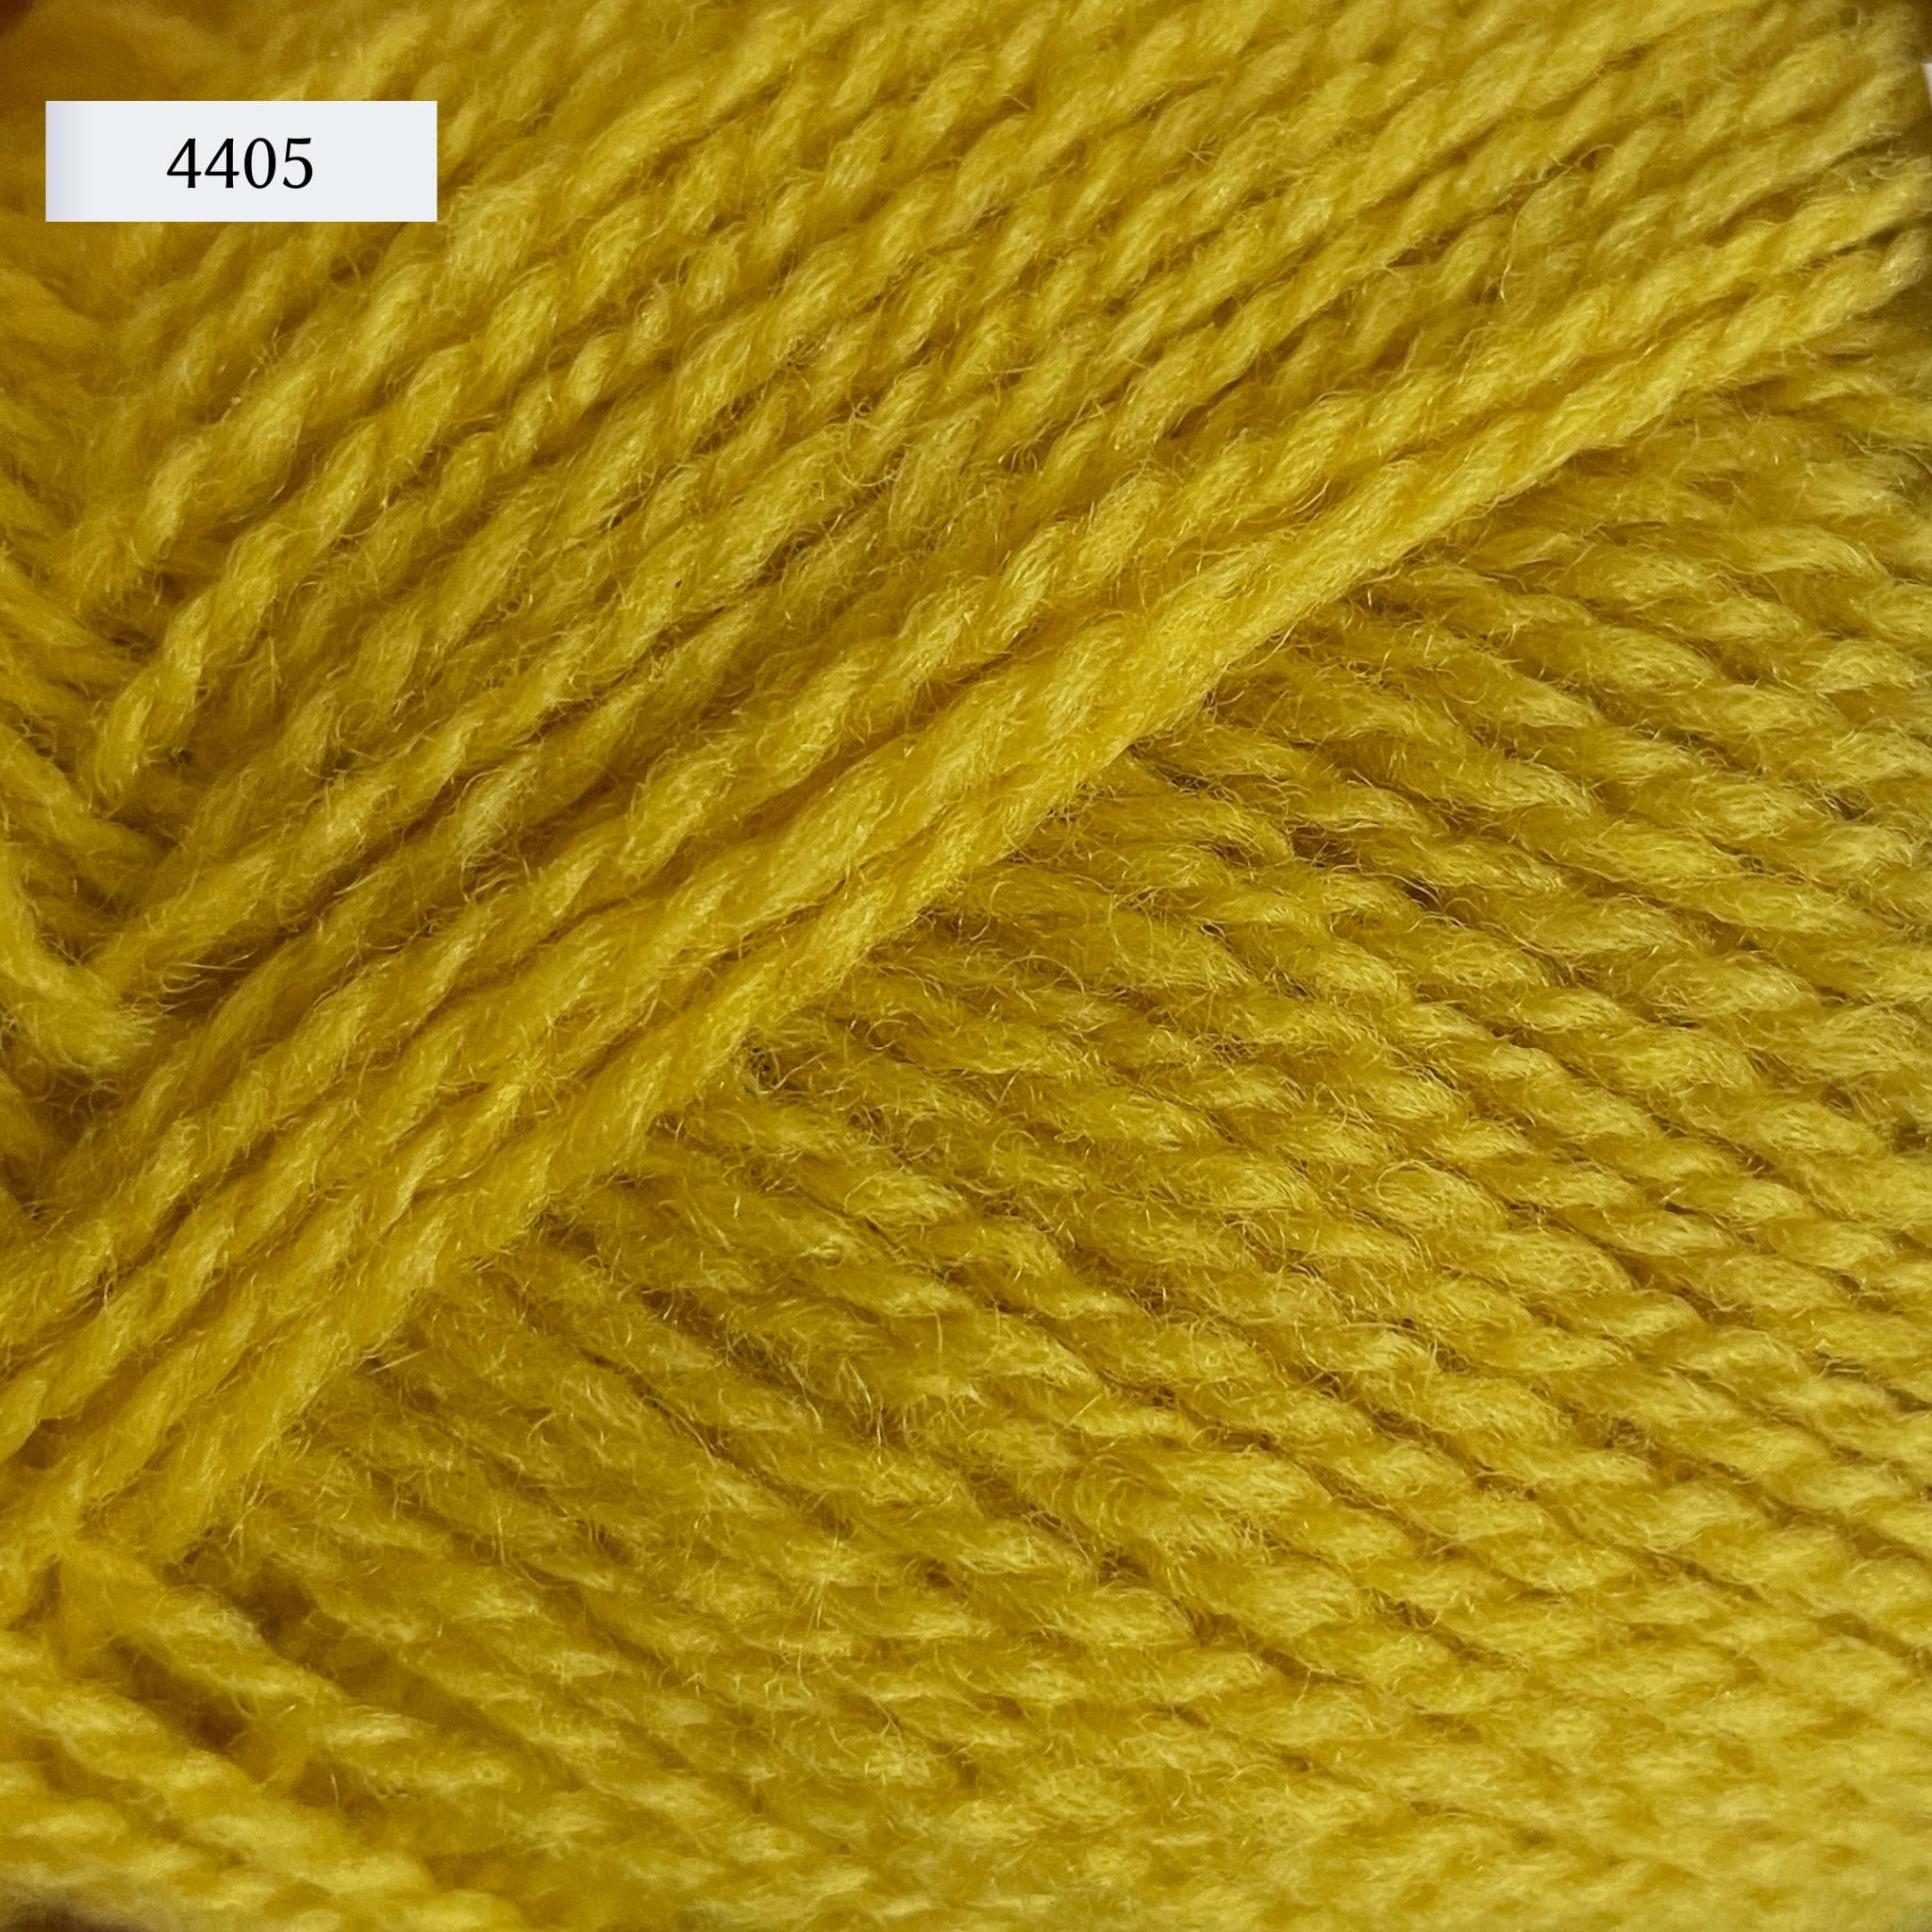 Rauma Finullgarn, a fingering/sport weight yarn, in color 4405, a lemon yellow